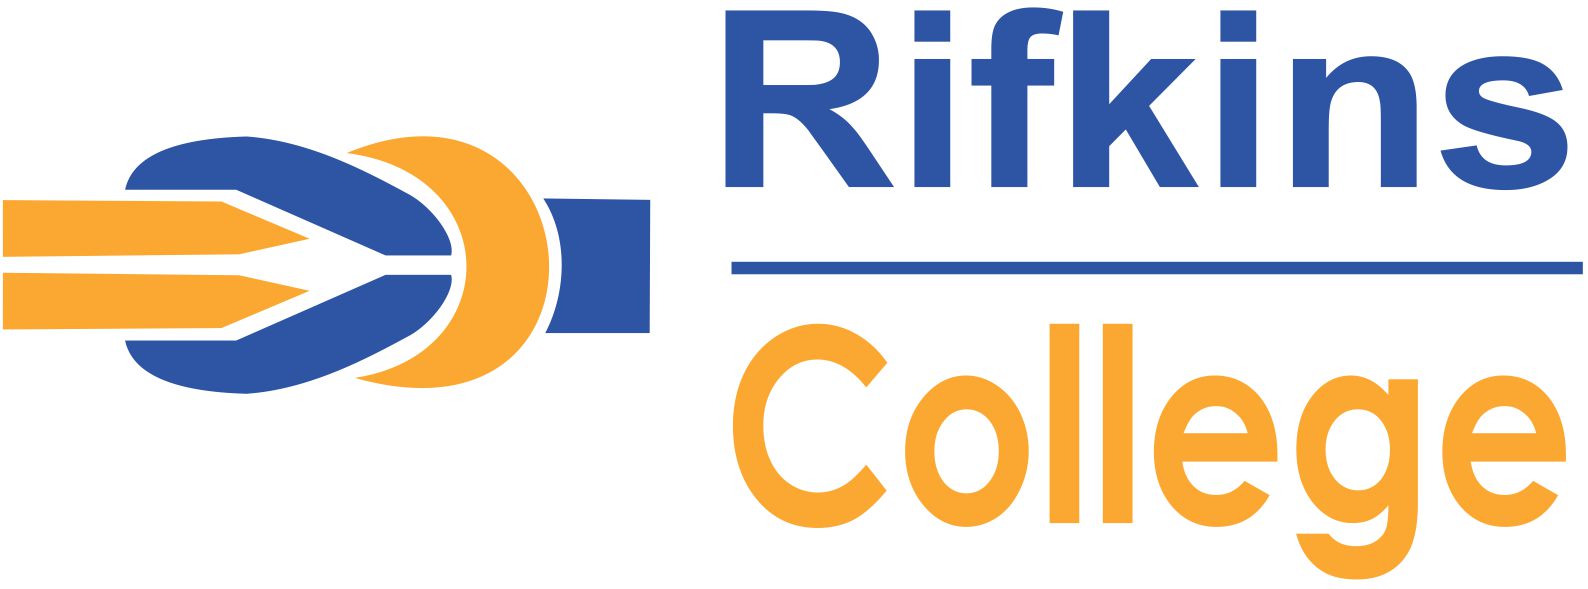 logo of Rifkins colleges in Mombasa, Kenya